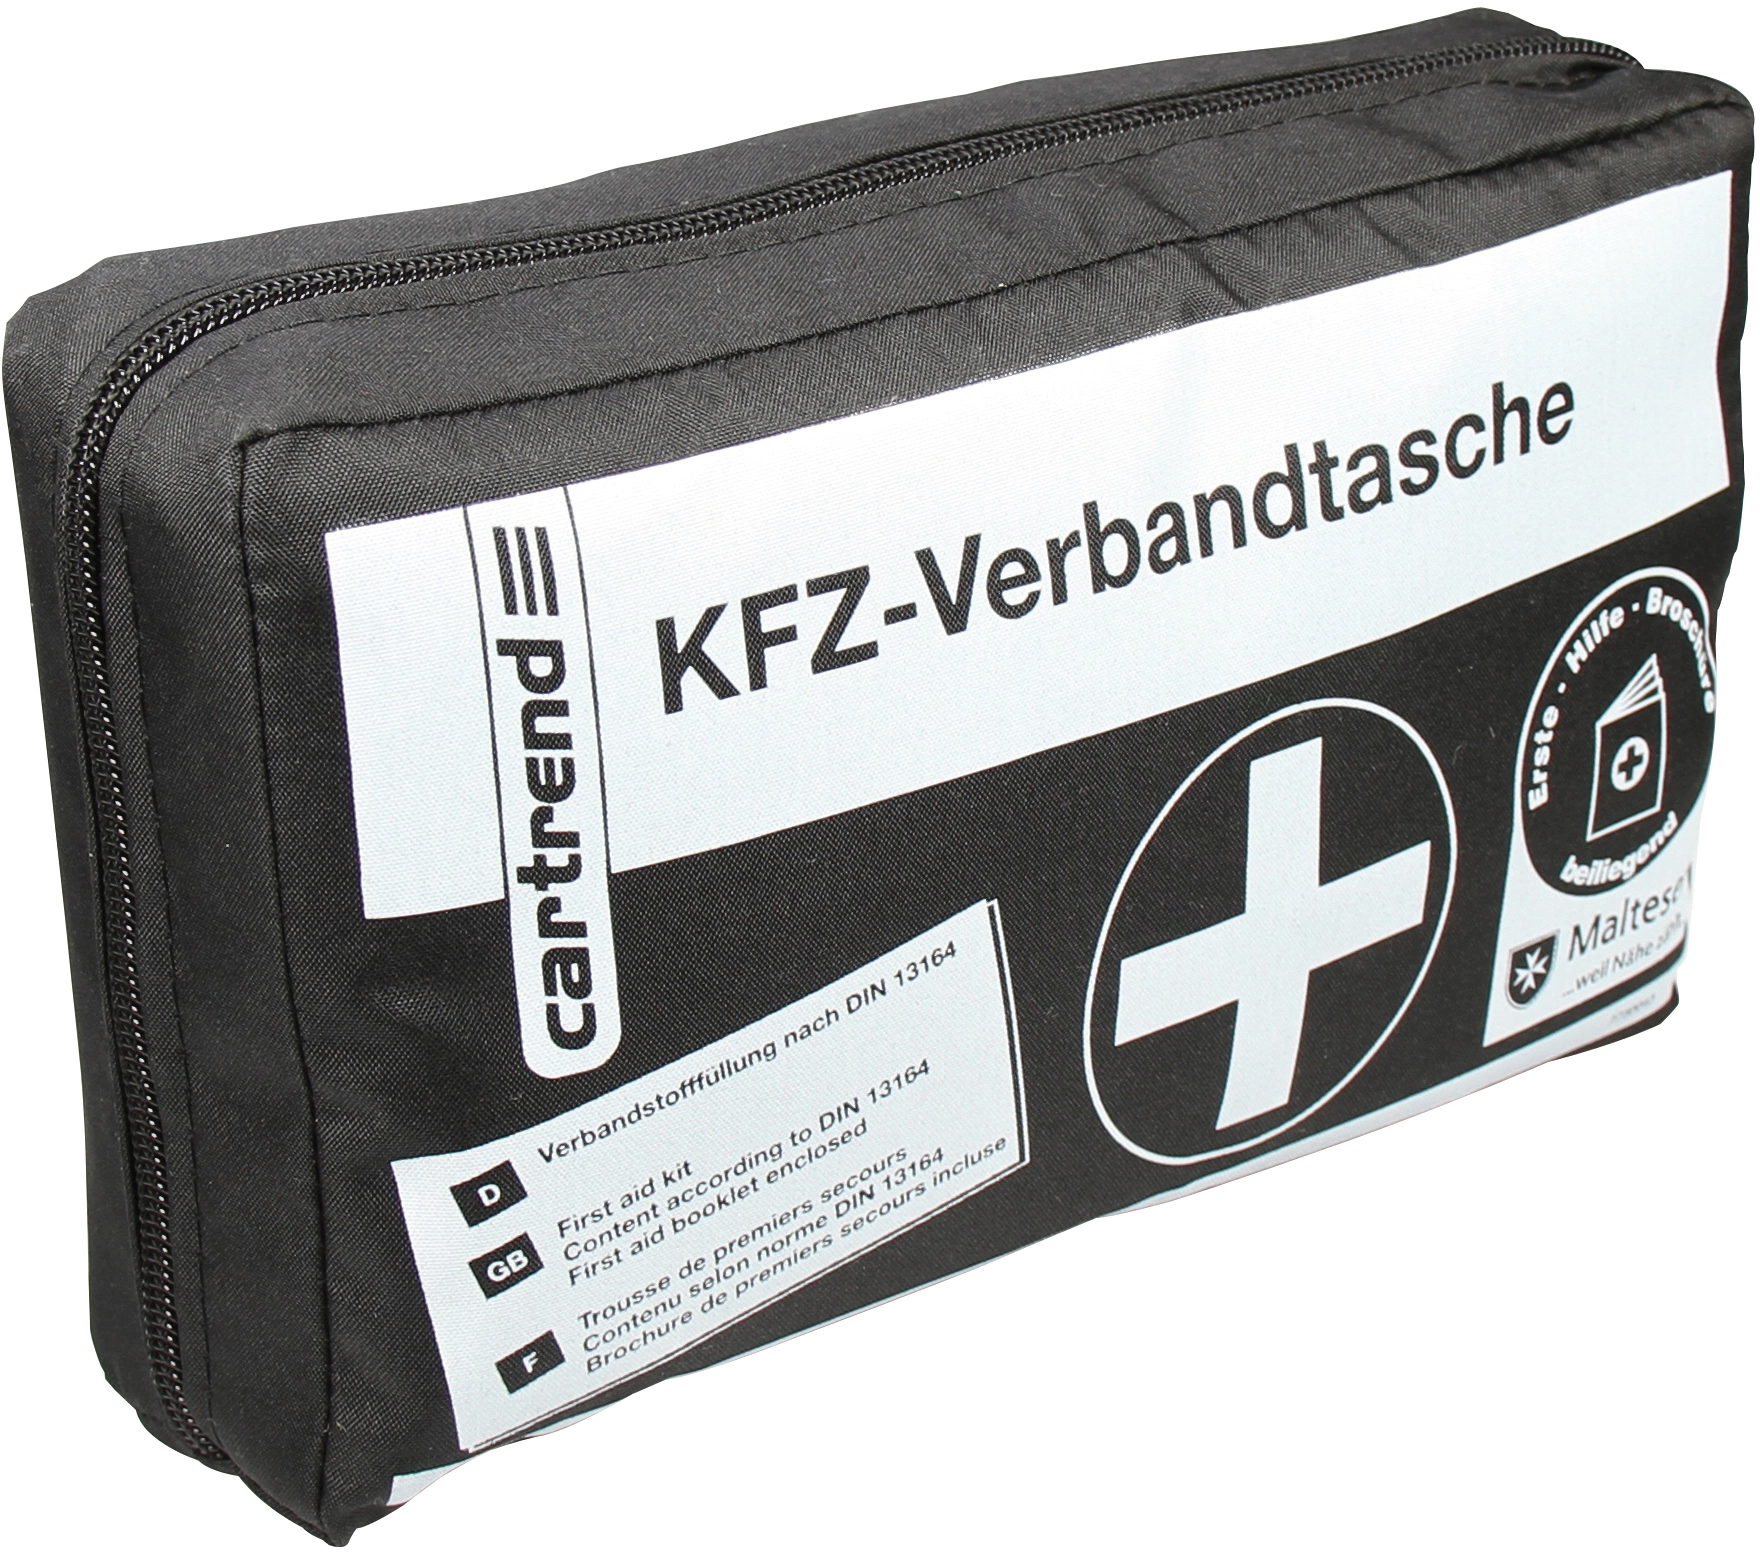 KFZ-Verbandtasche Compact 